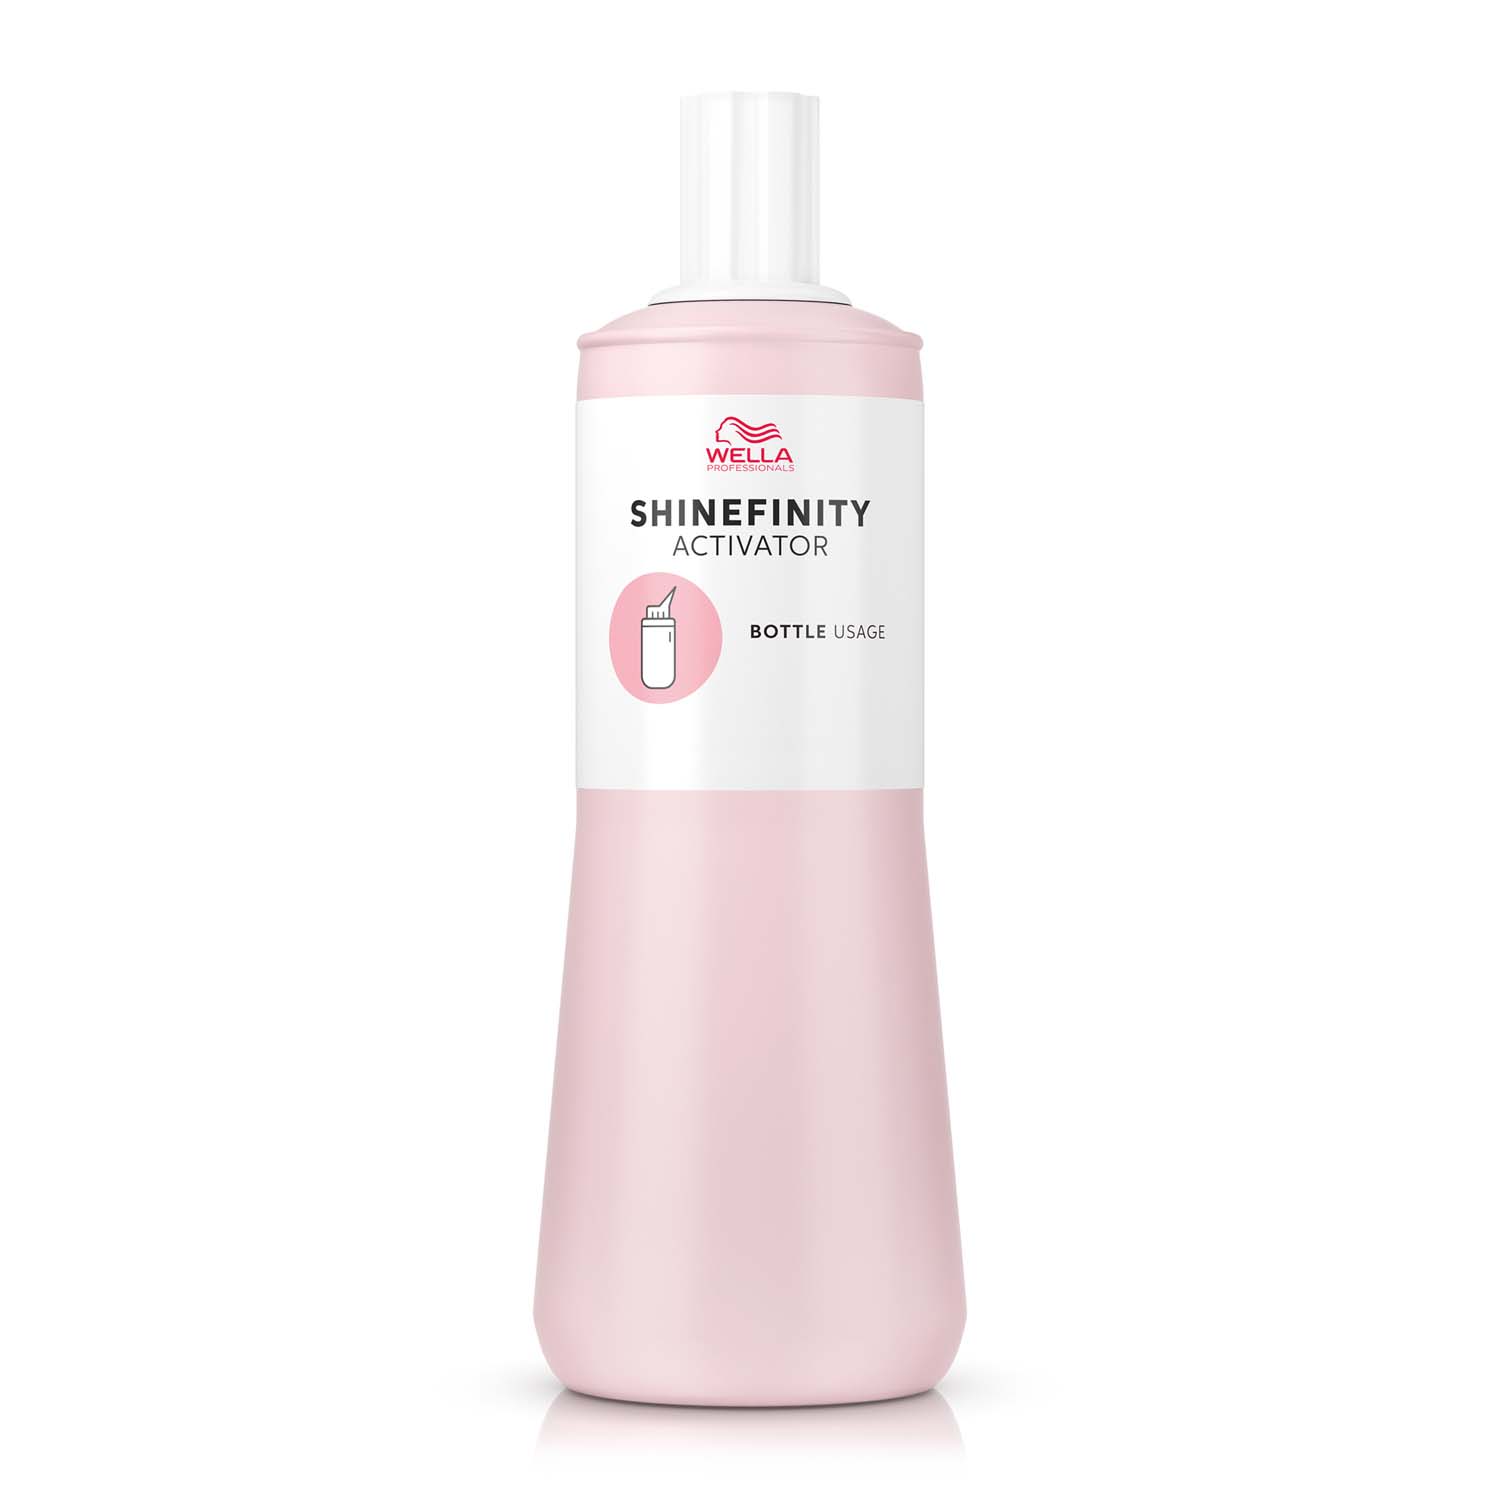 Shinefinity Activator bottle, Liter